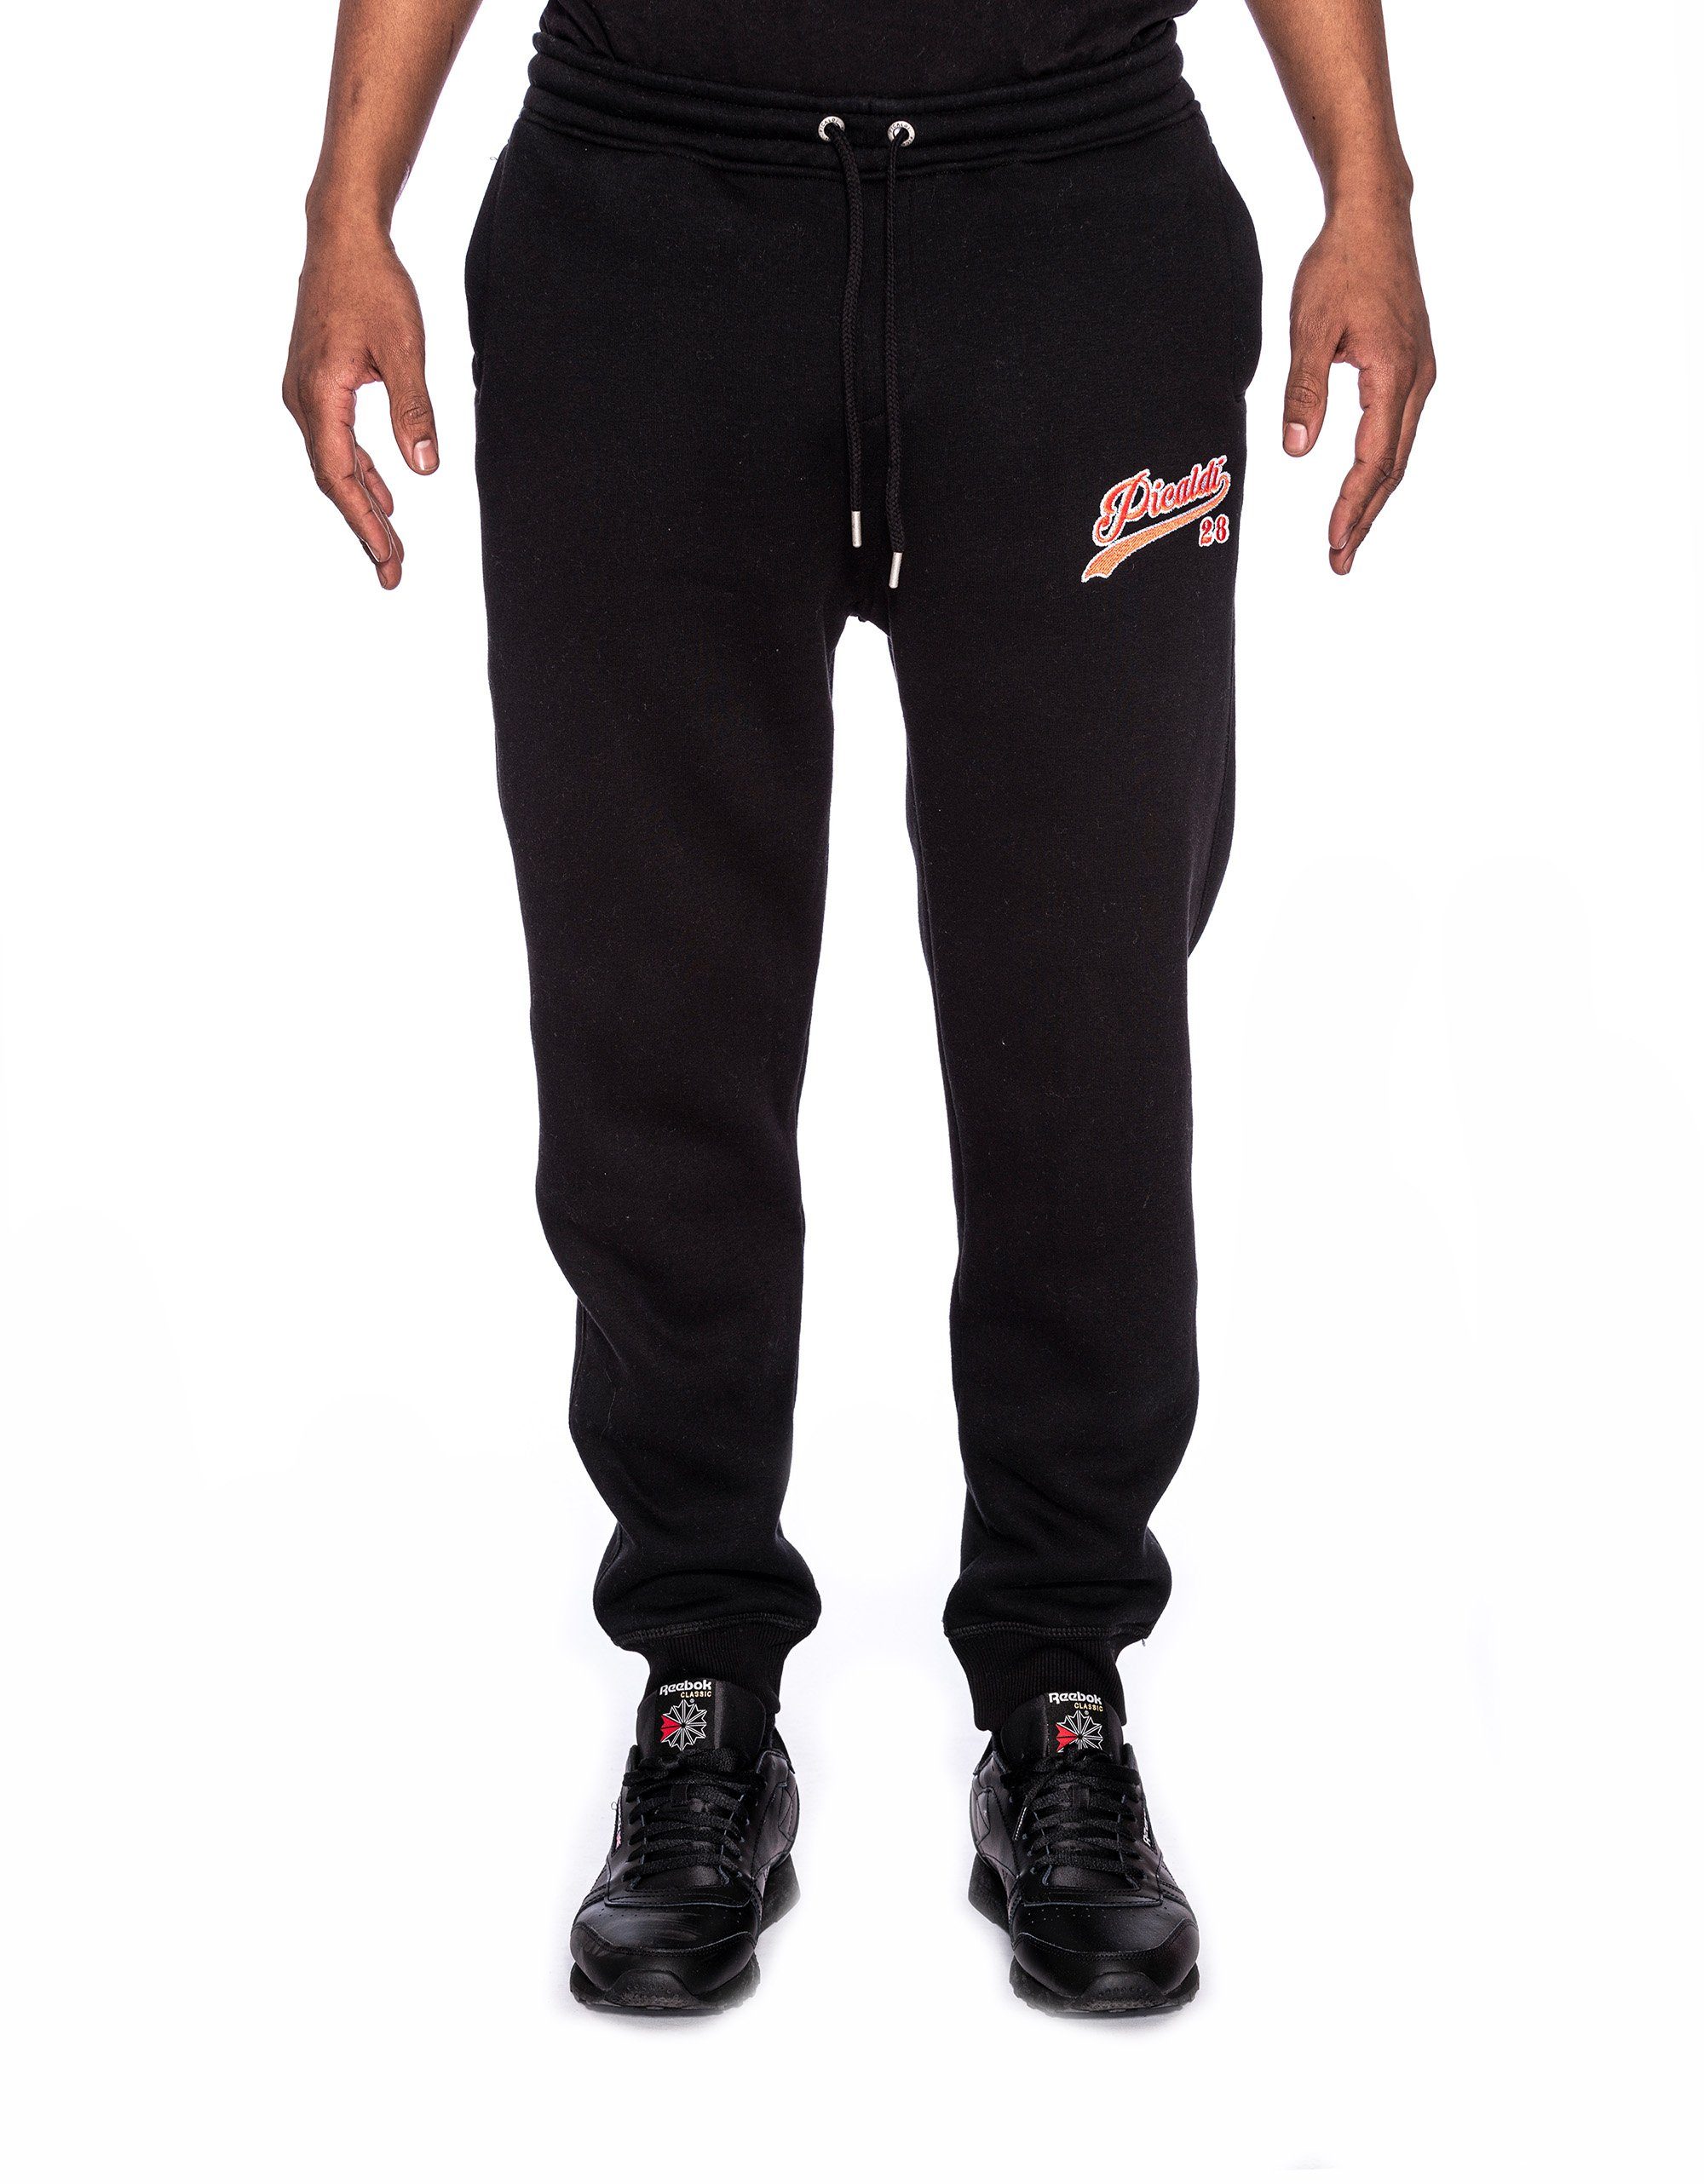 PICALDI Jeans Jogginghose Classical Freizeithose, Trainingshose, Sweatpant Black